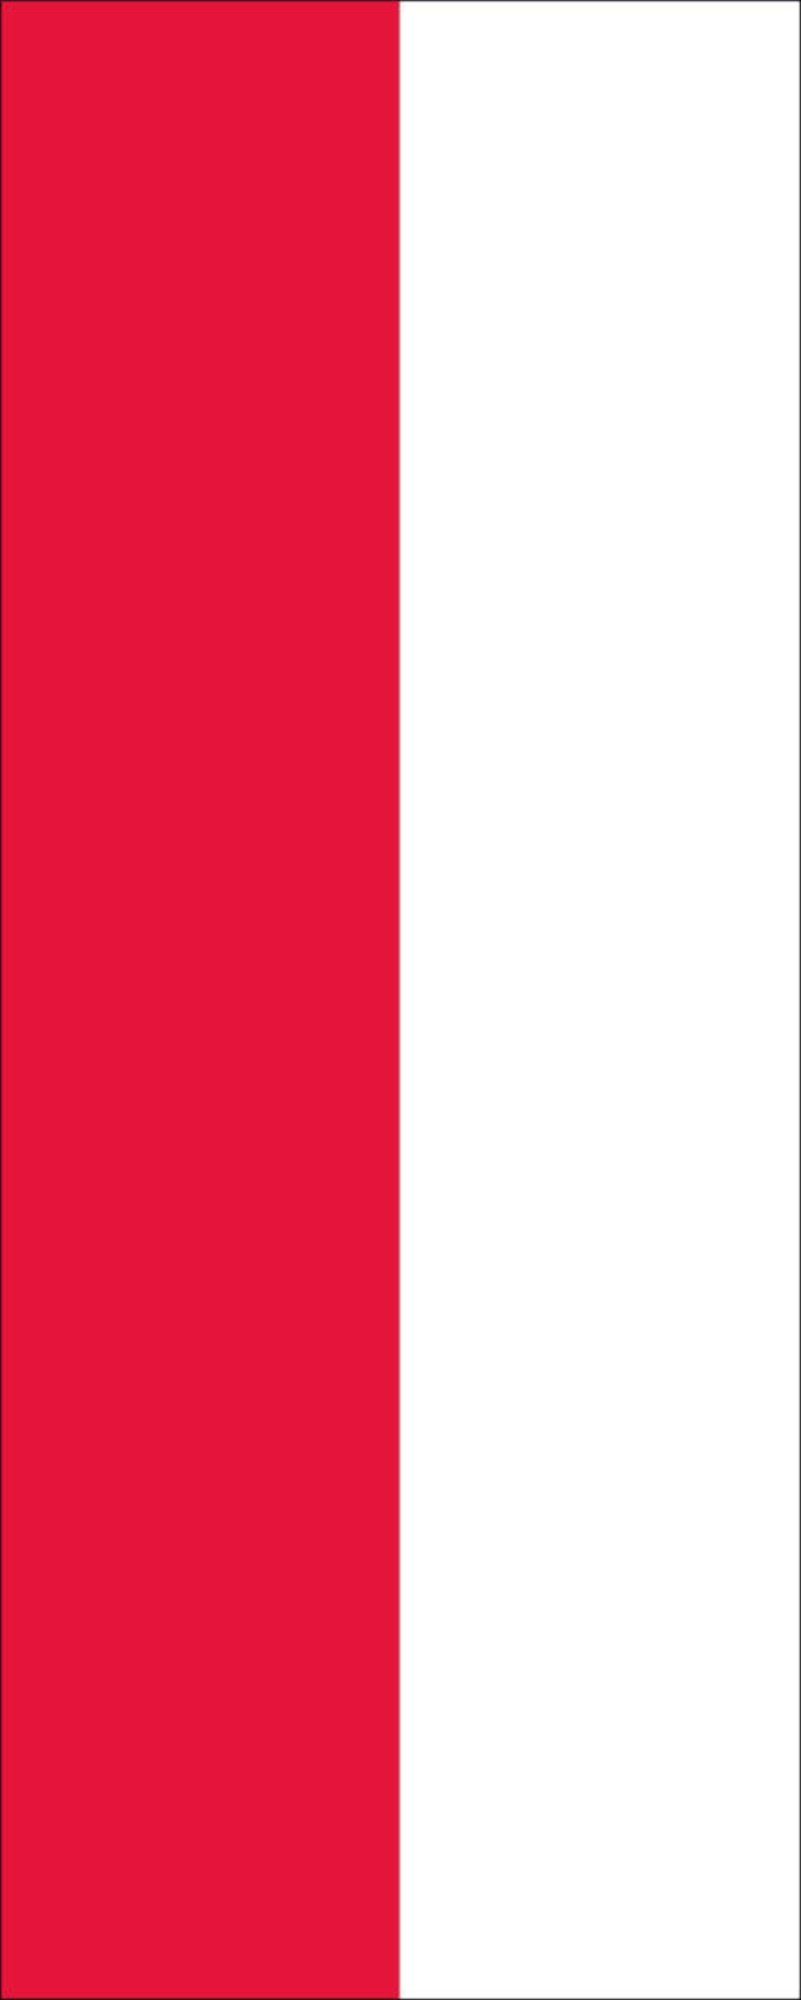 Rot Weiß Hochformat 110 Schützenfest flaggenmeer Flagge Flagge g/m²